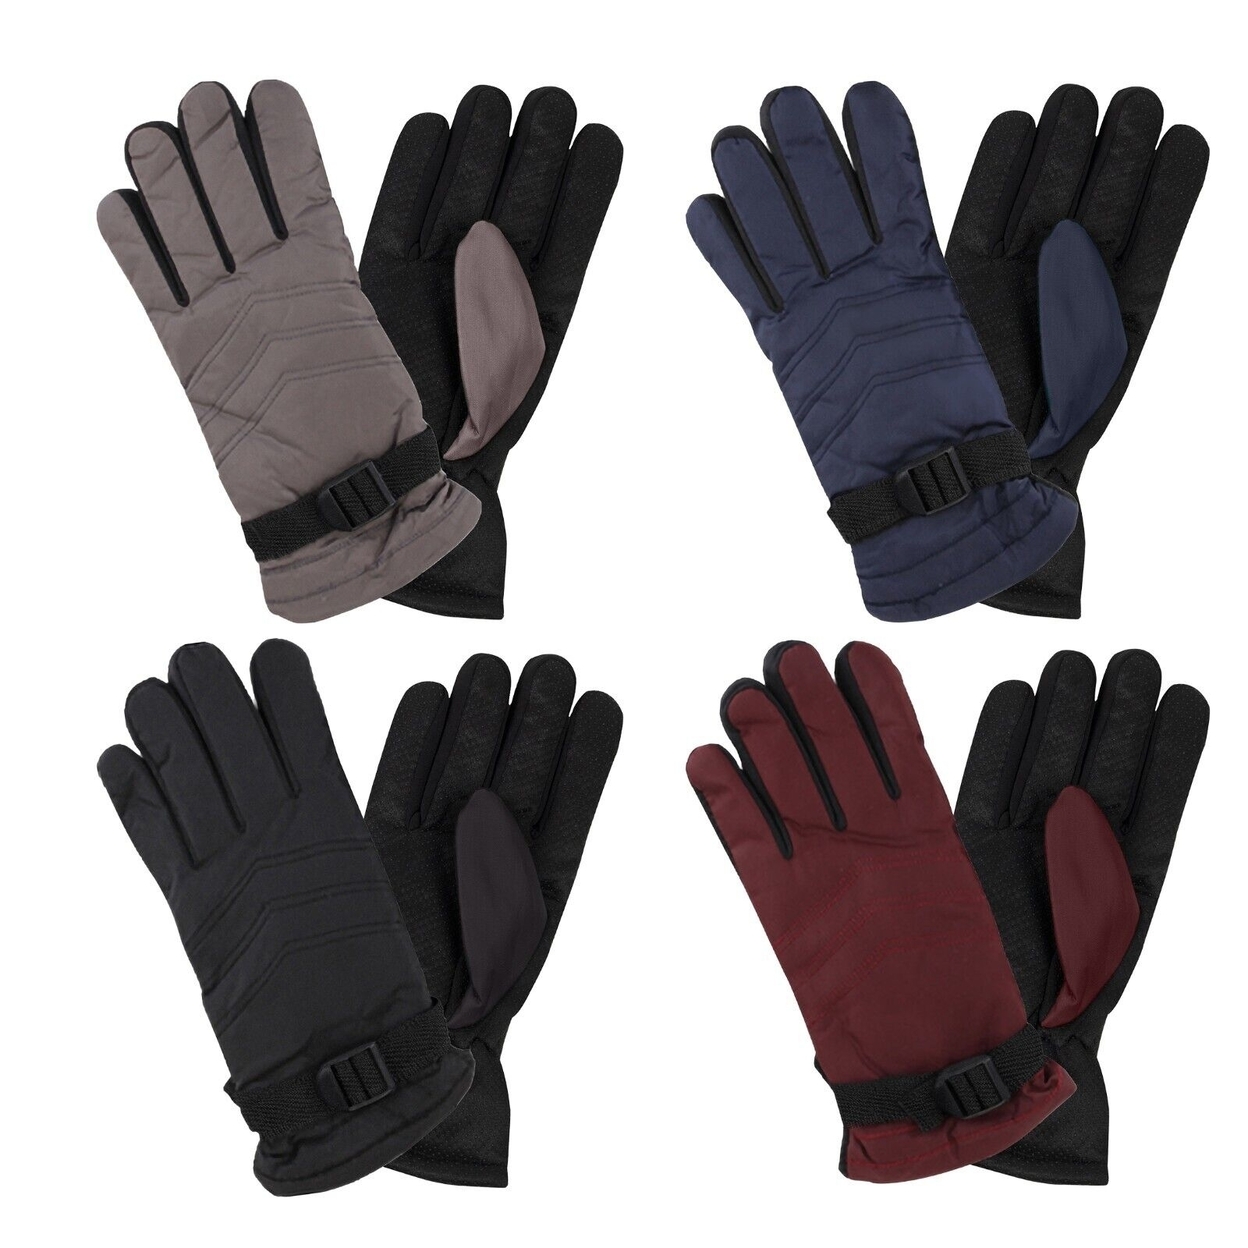 4-Pairs: Women's Cozy Fur Lined Snow Ski Warm Winter Gloves - Black